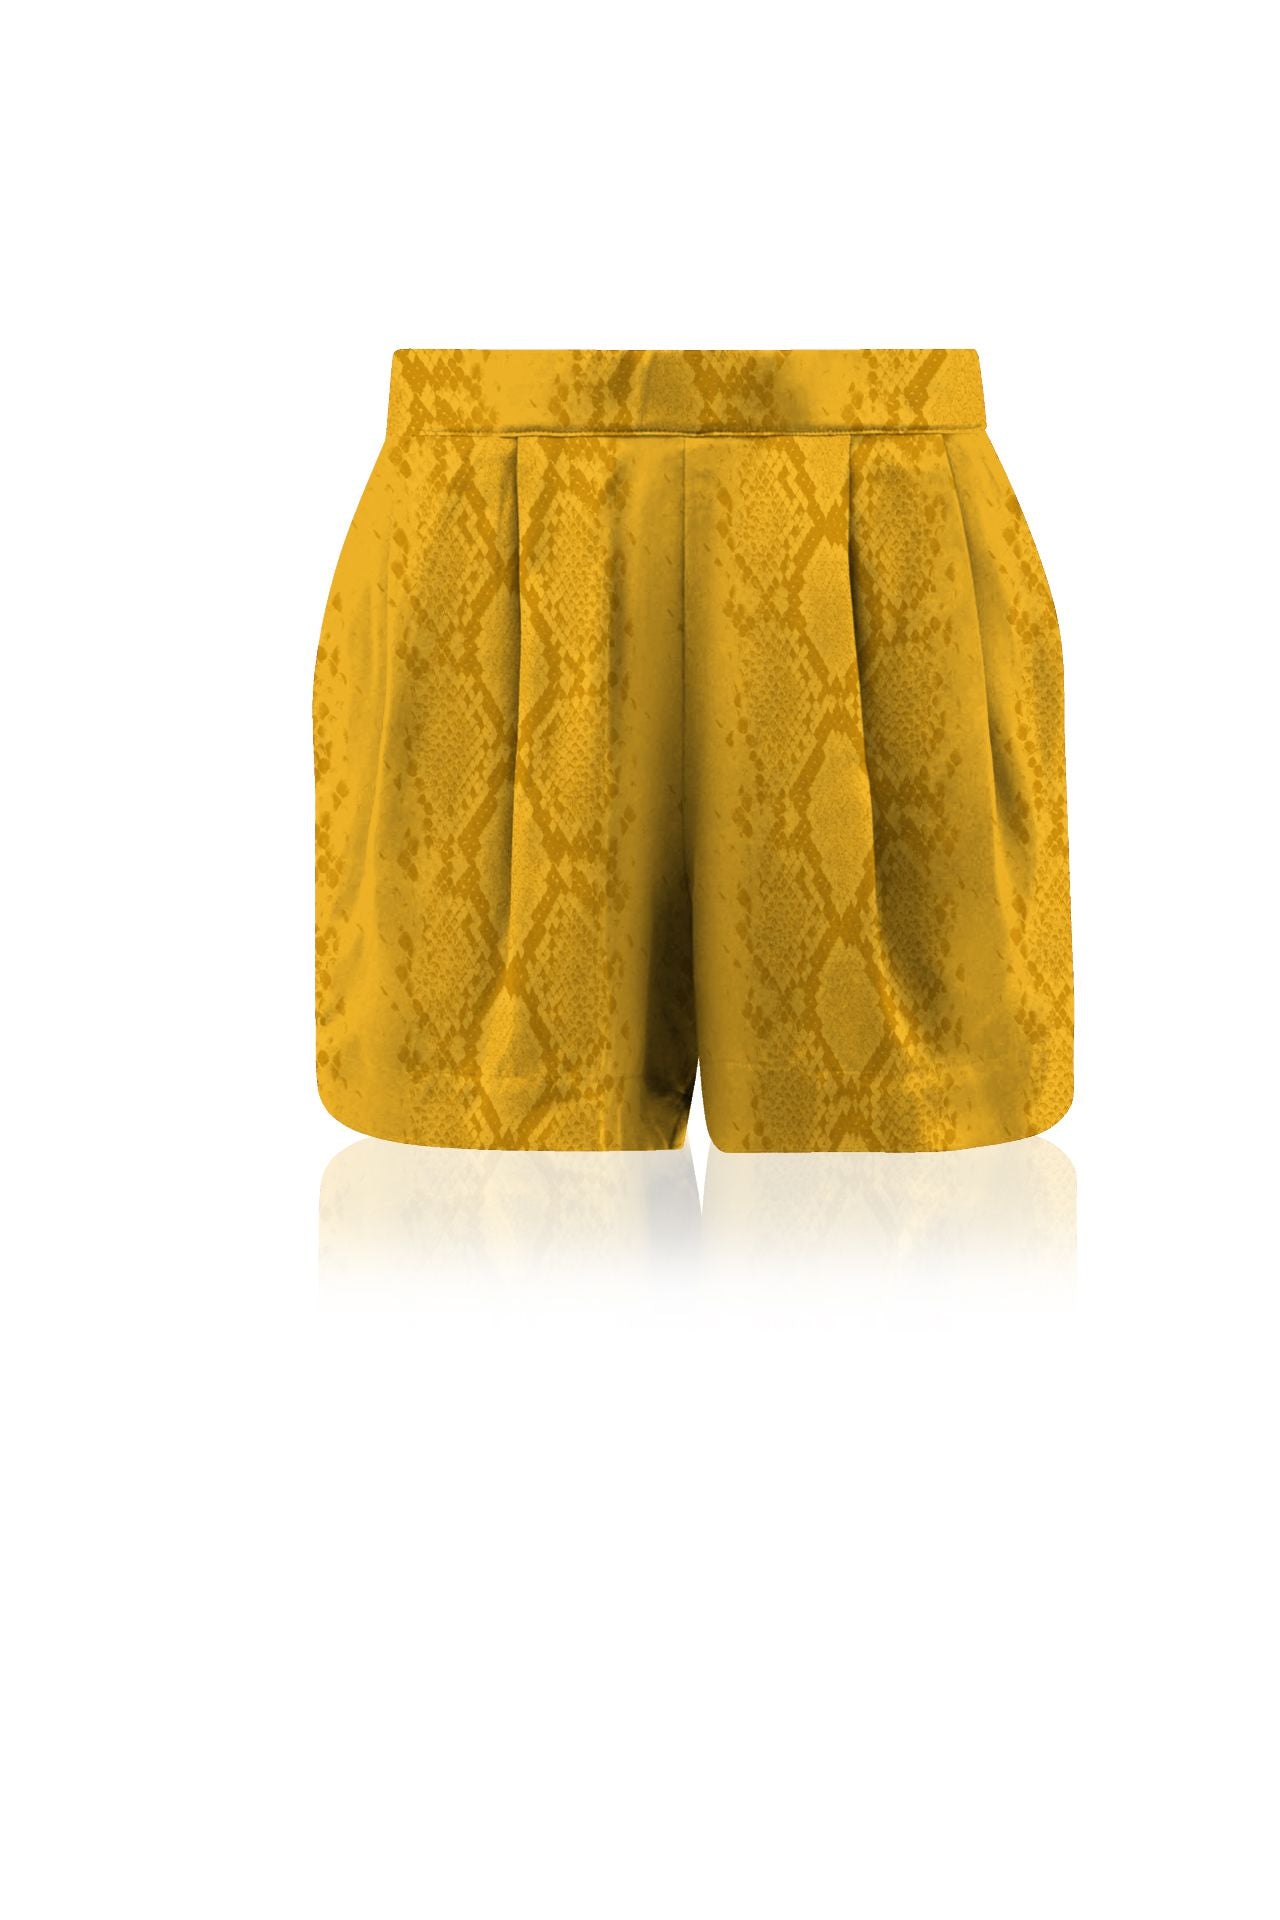 Vegan Silk Shorts in Solid Golden Cob